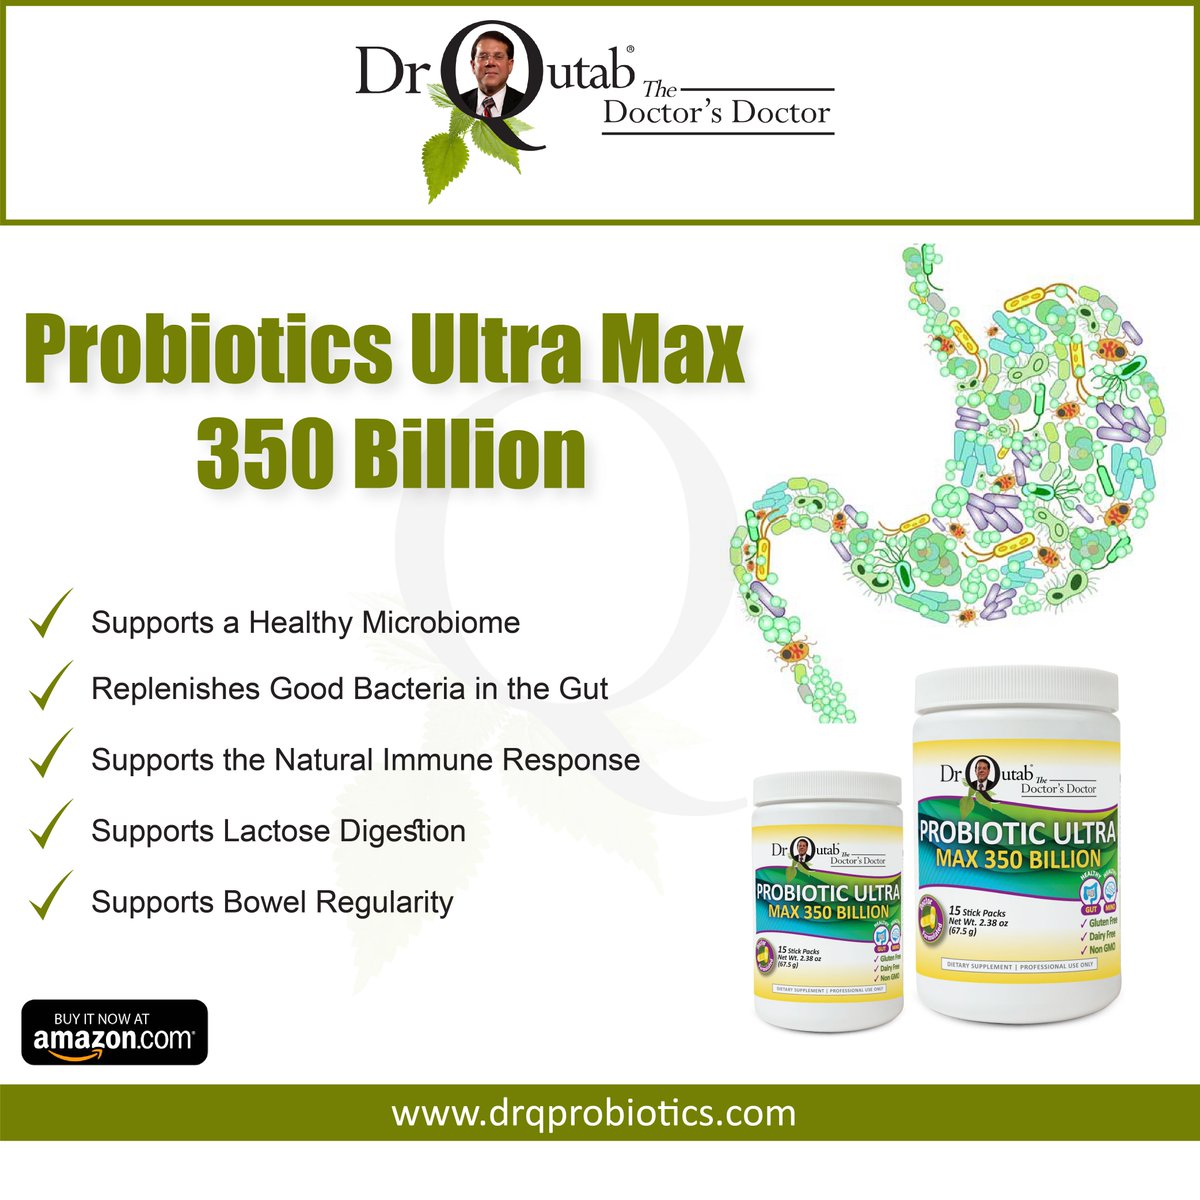 To maintain your ecosystem use Dr. Q probiotics ultra max 350 billion especially for healthy gut and mind.
amazon.com/Dr-Qutab-Docto…
Drqprobiotics.com
#drq #doctor’sdoctor #Drqprobiotics #ecosystem #healthymicrobiome #replenish #goodbacteria